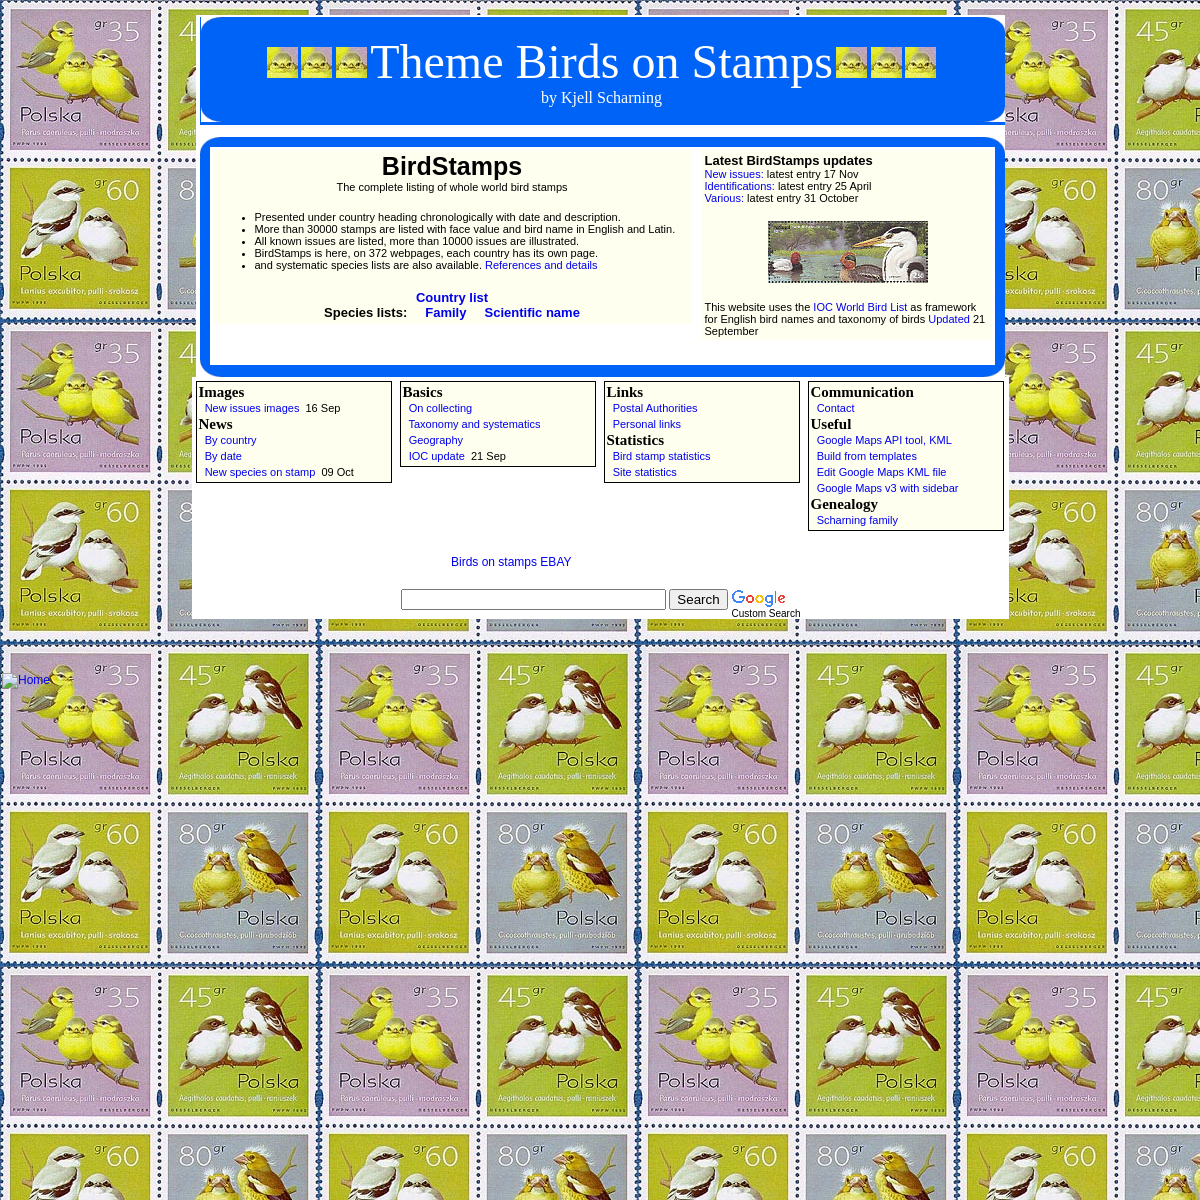 A complete backup of birdtheme.org